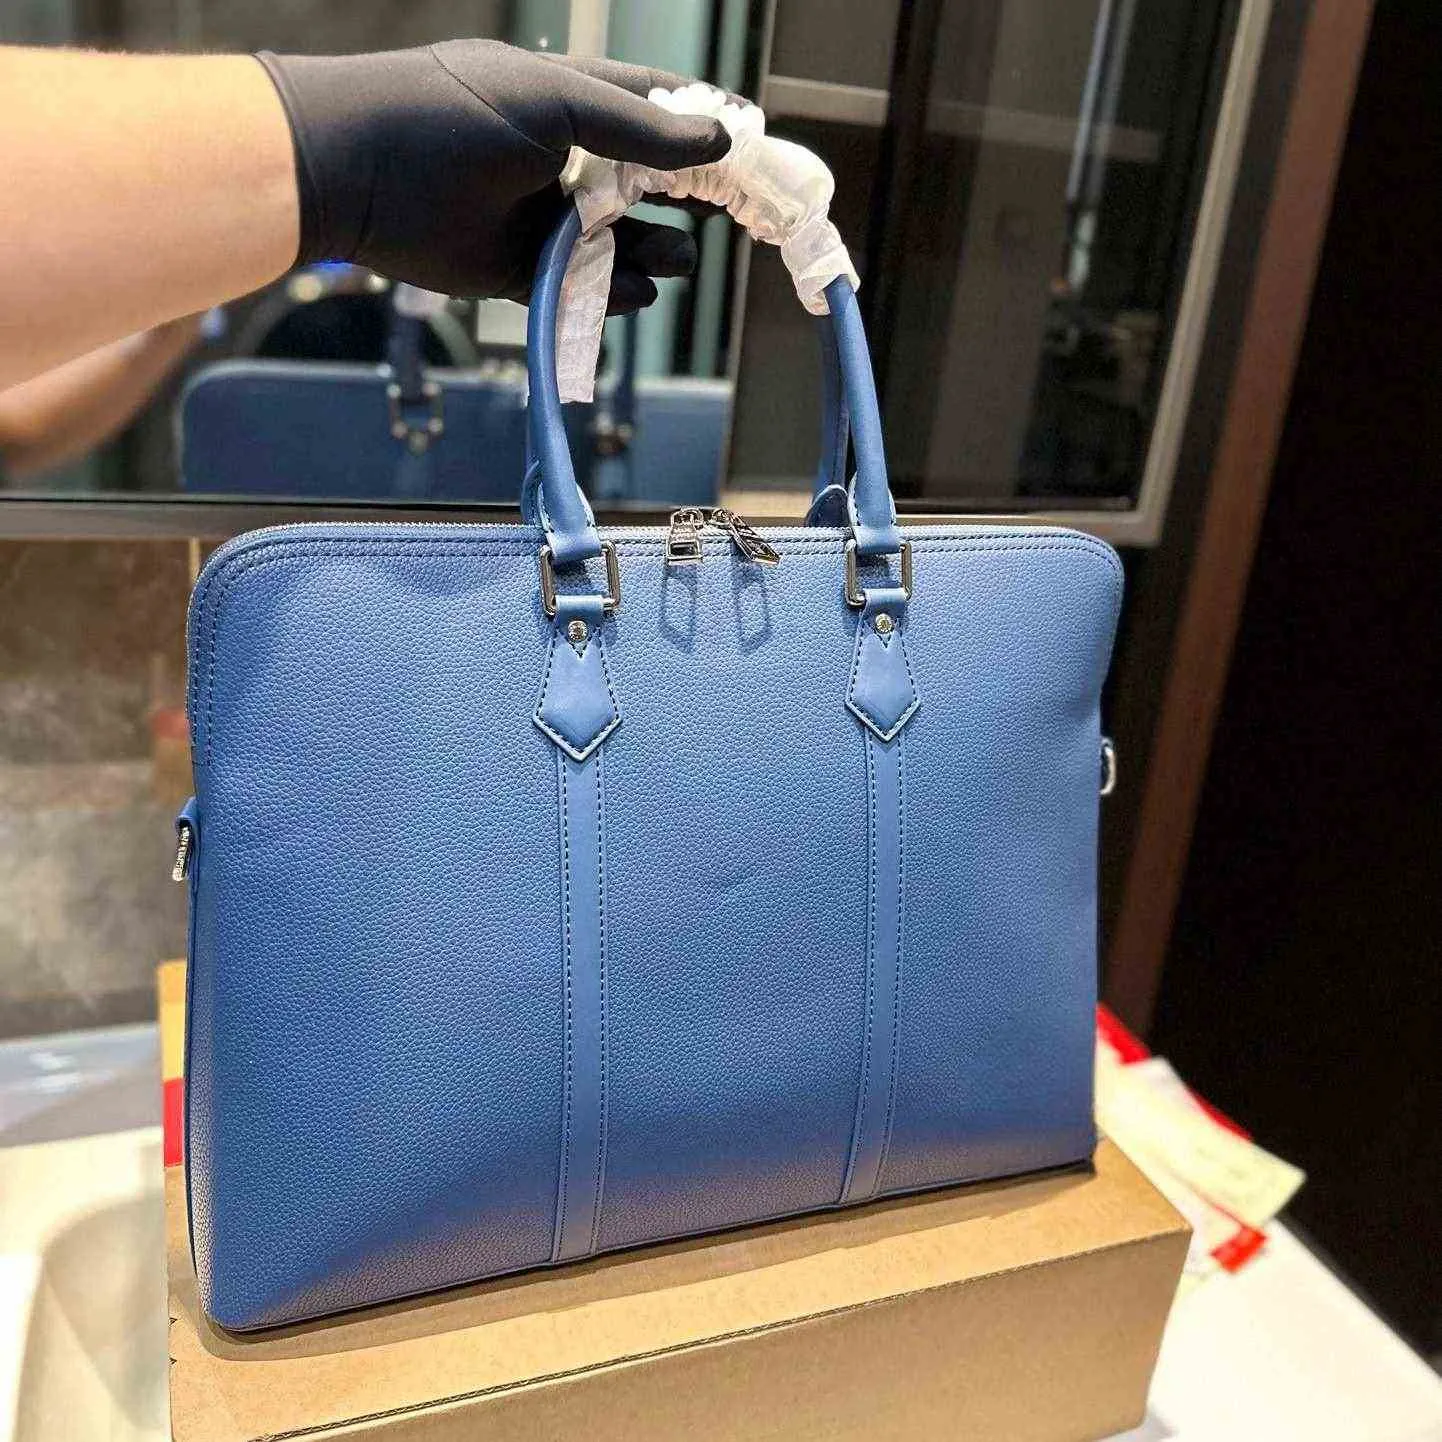 Teczka, torba komputerowa, torebka, torba luksusowa, designerska klasyczna torba